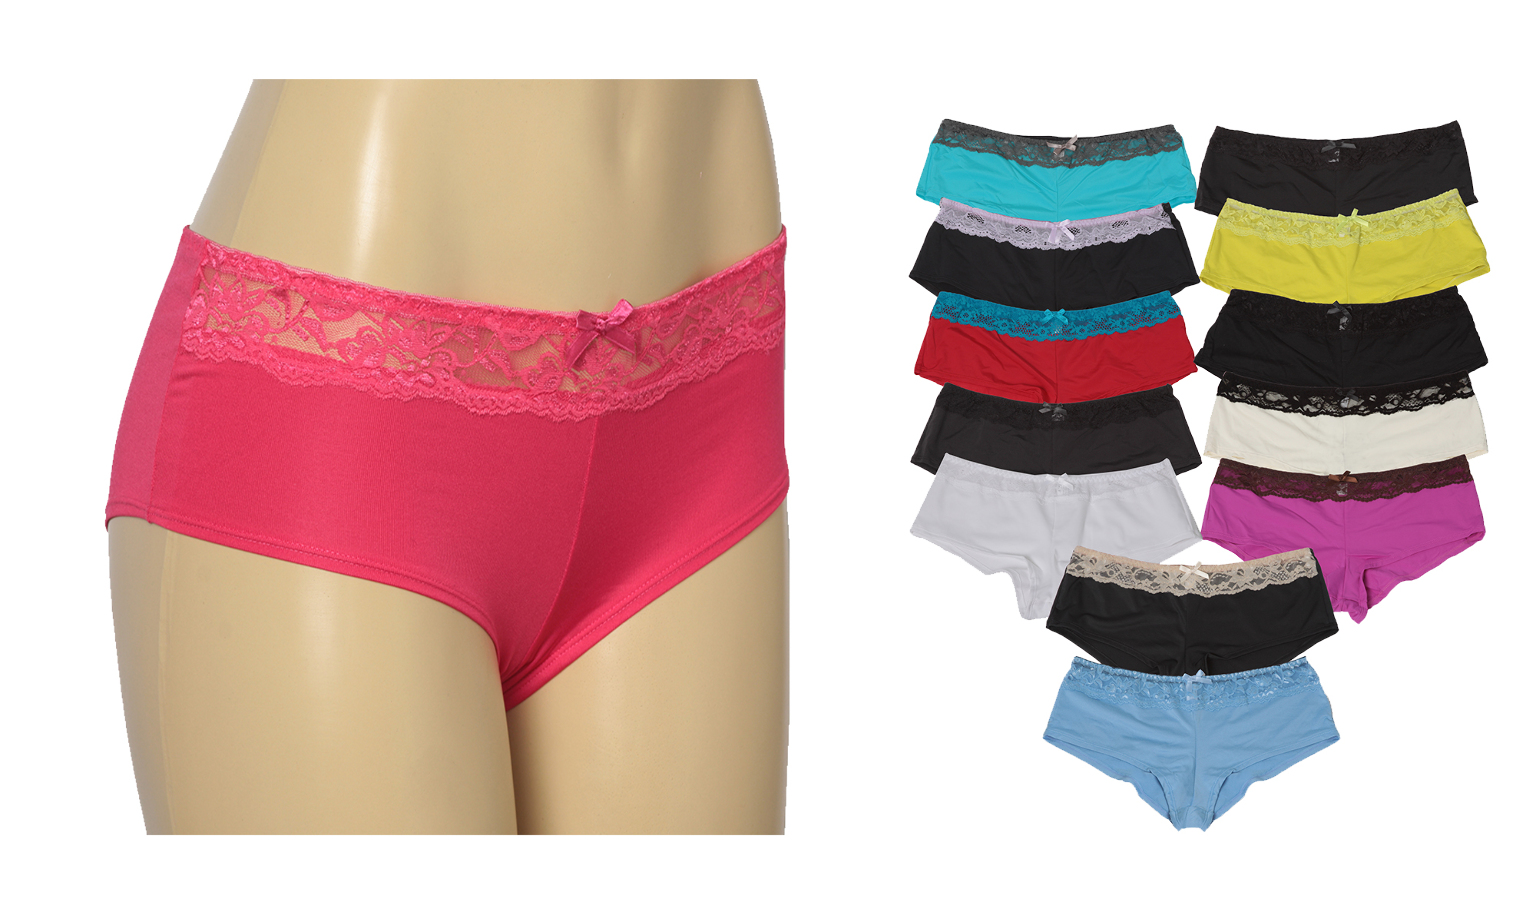 Bulk Women's Lace Underwear - Assorted, Size 5-7 - DollarDays